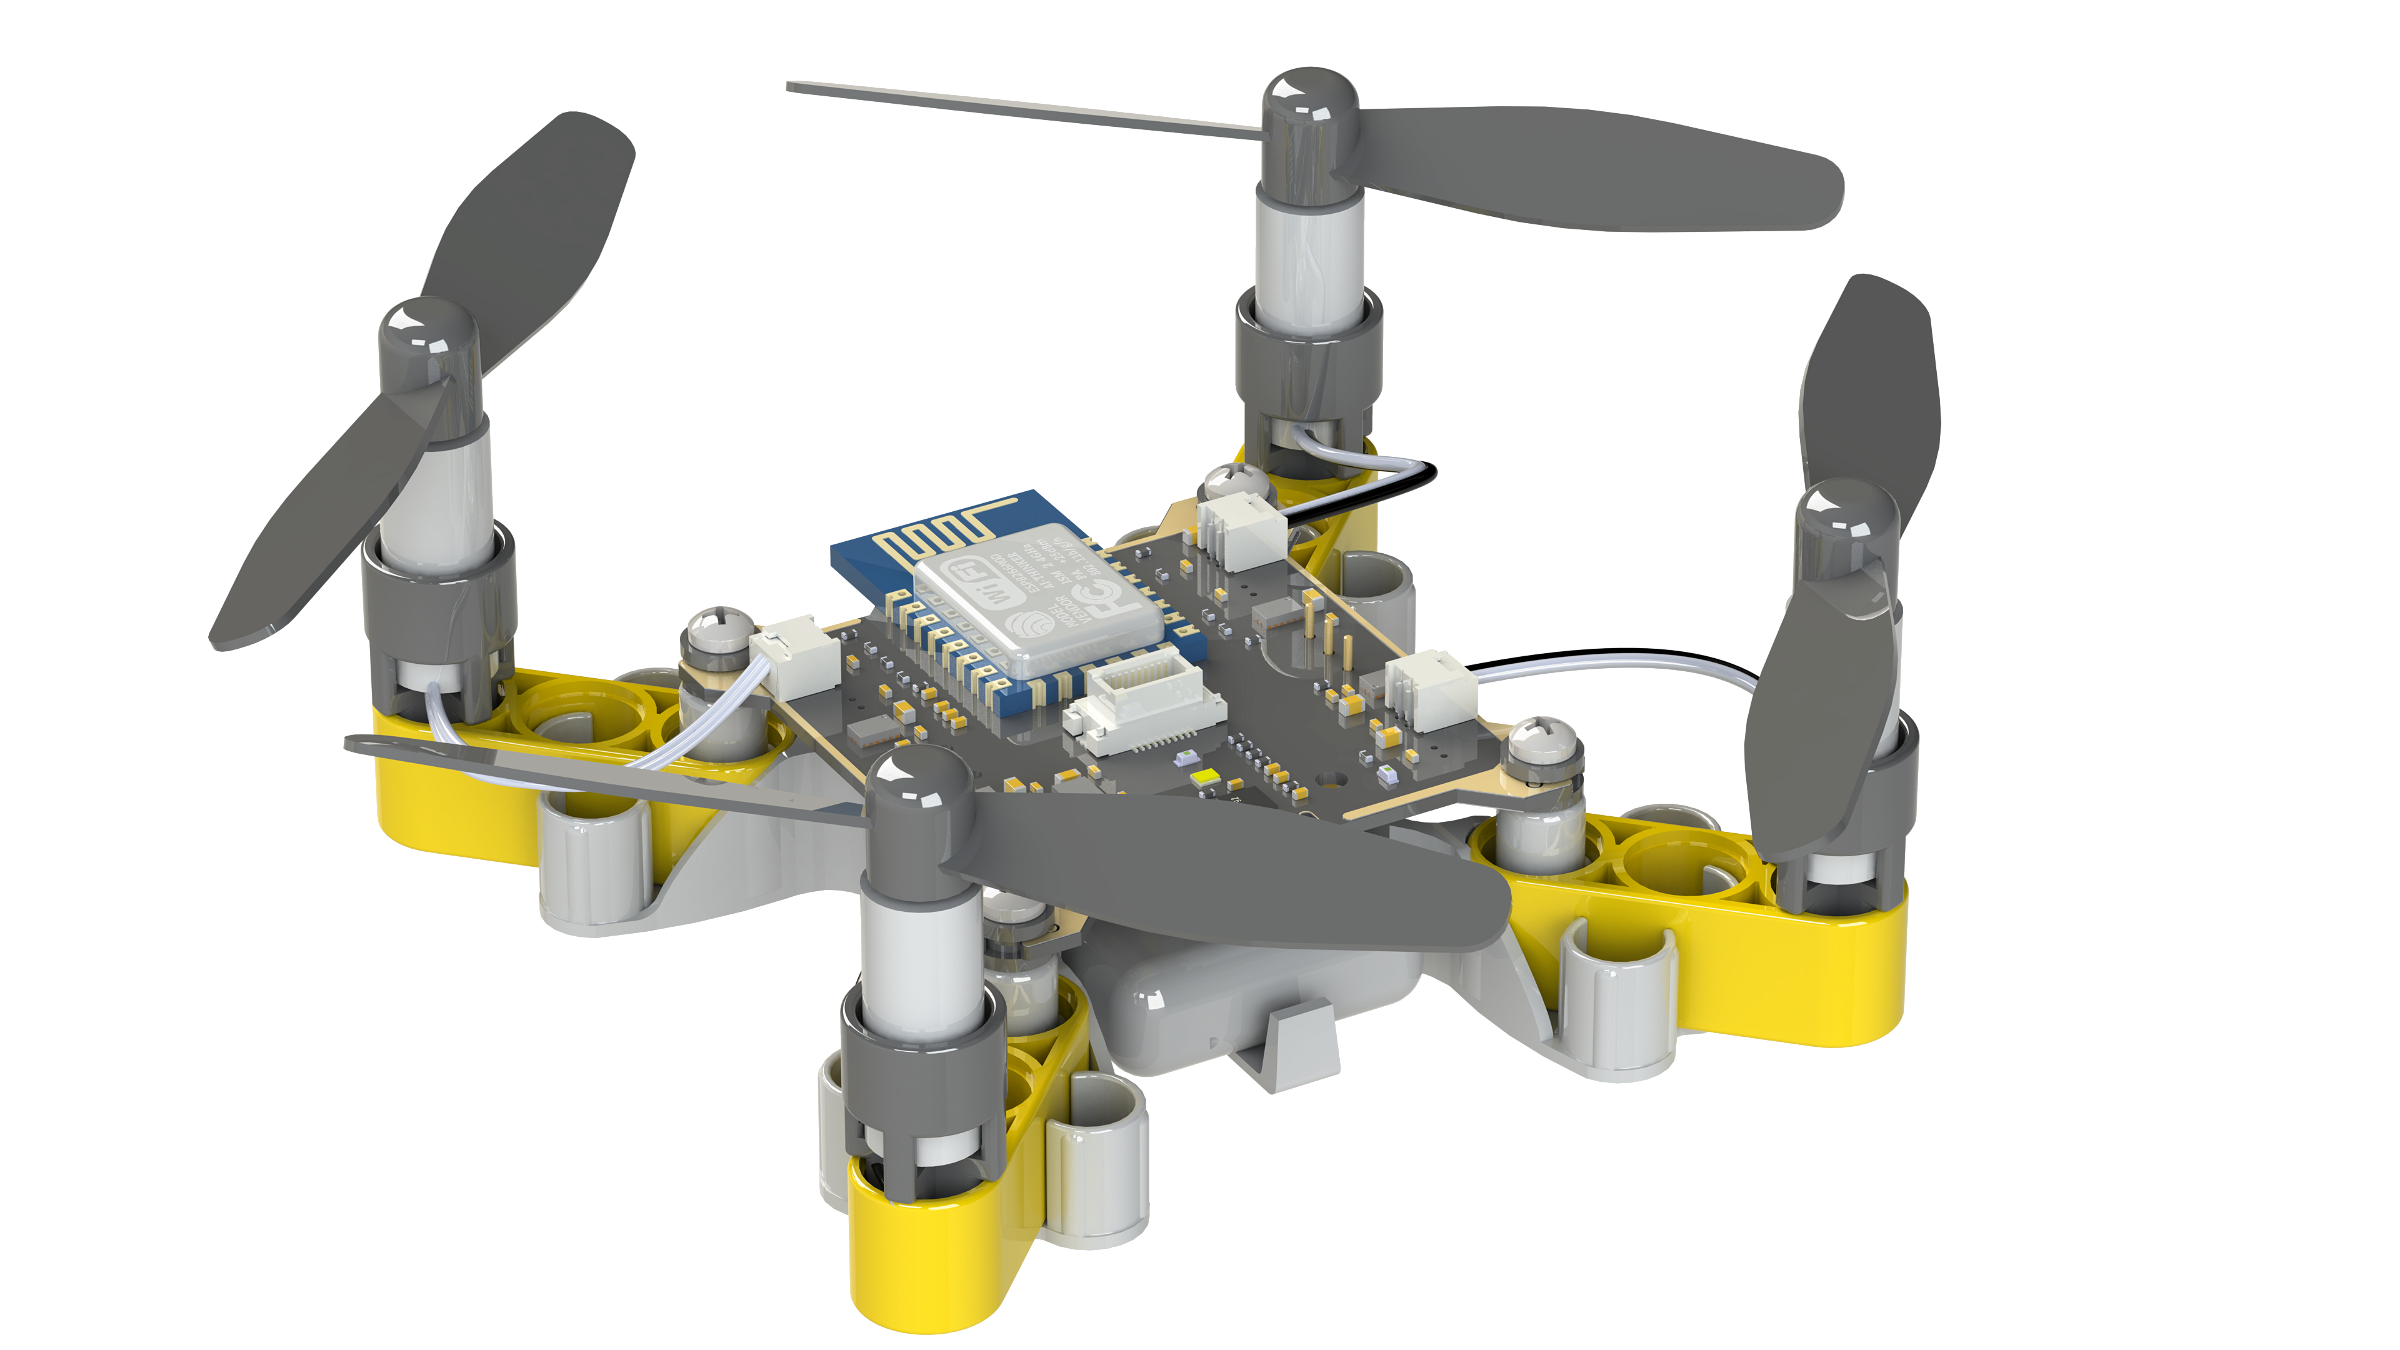 Blix Drone 4